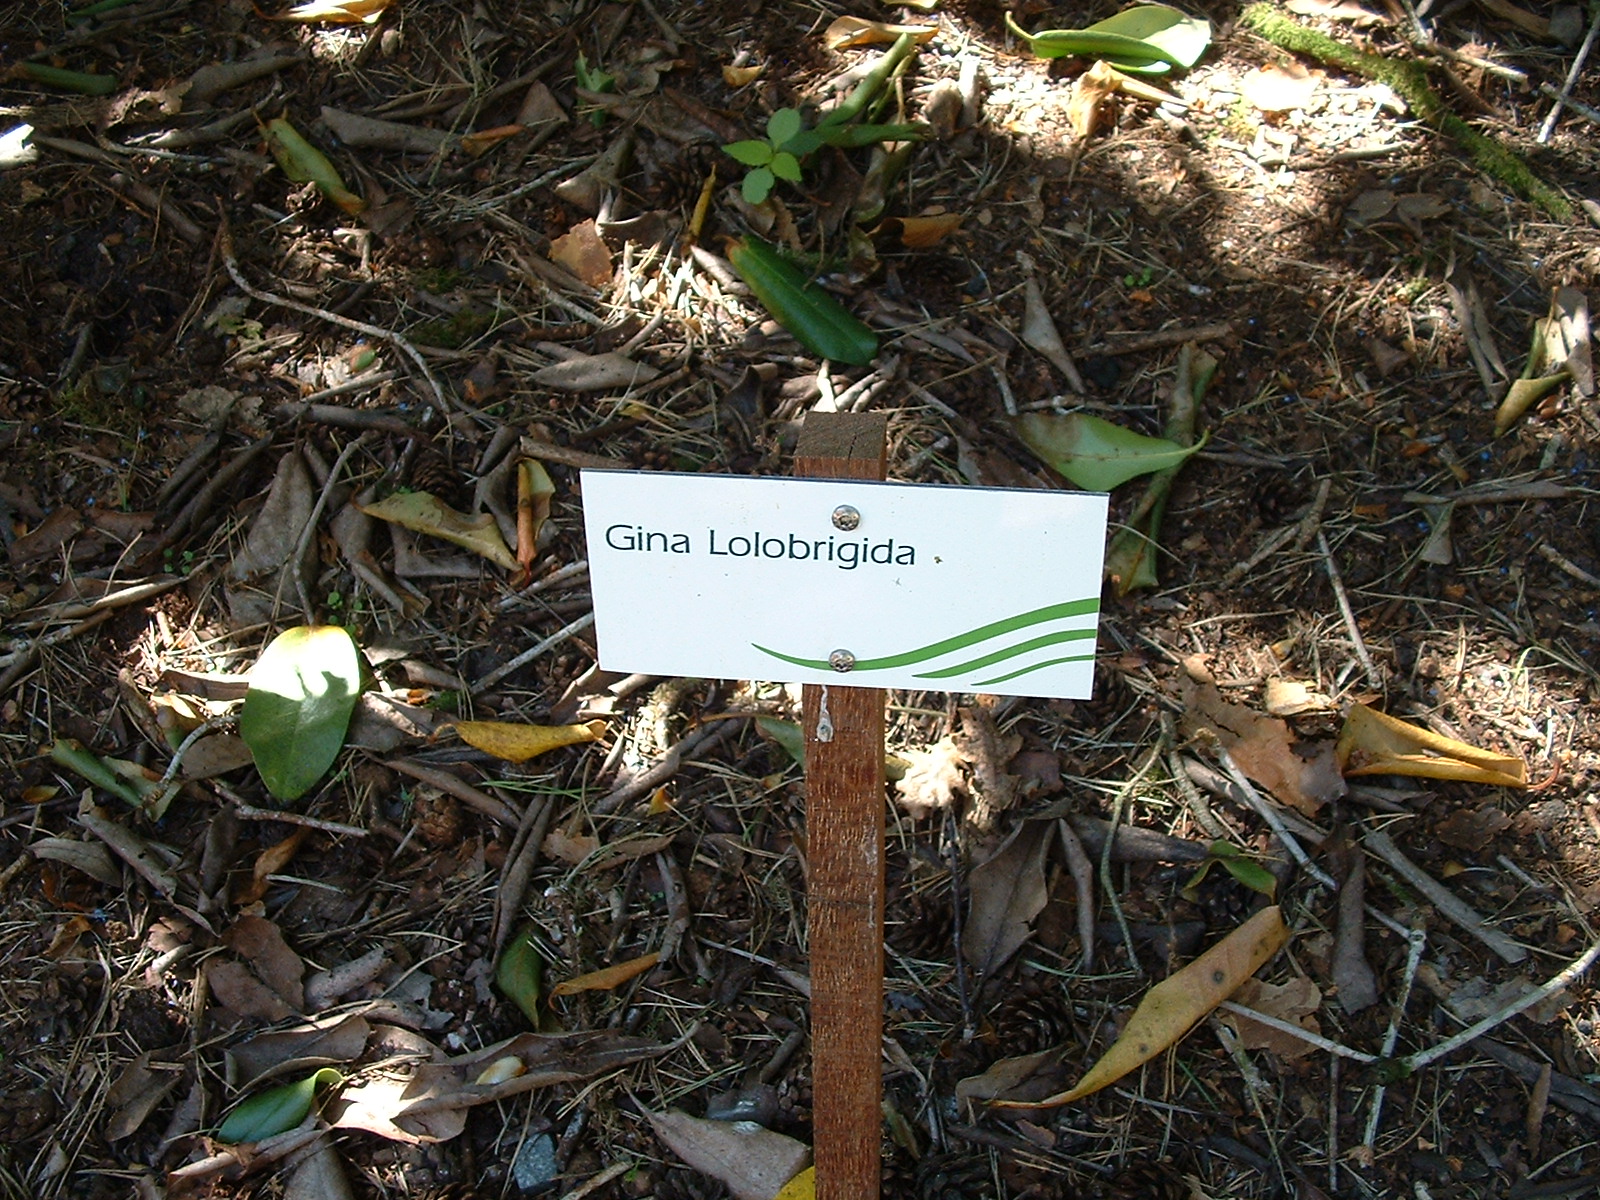 BRUNS Rhododendron-Park in Gristede - Gina Lolobridida